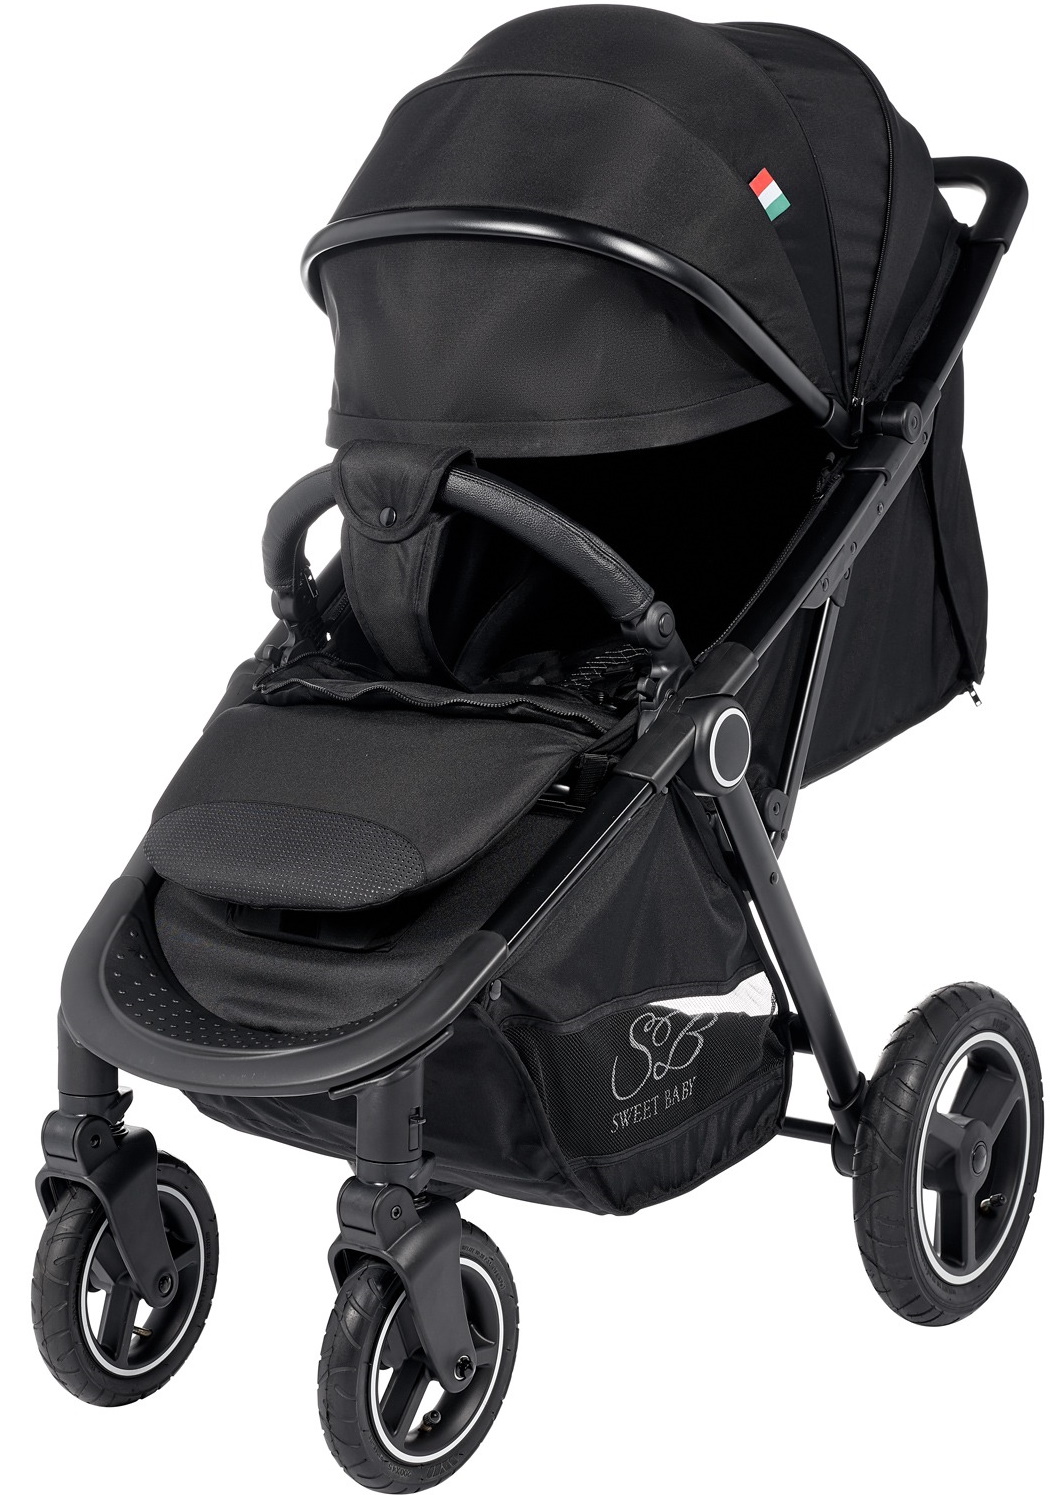 Прогулочная коляска Sweet Baby Suburban Compatto Air, цвет: черный прогулочная коляска sweet baby compatto